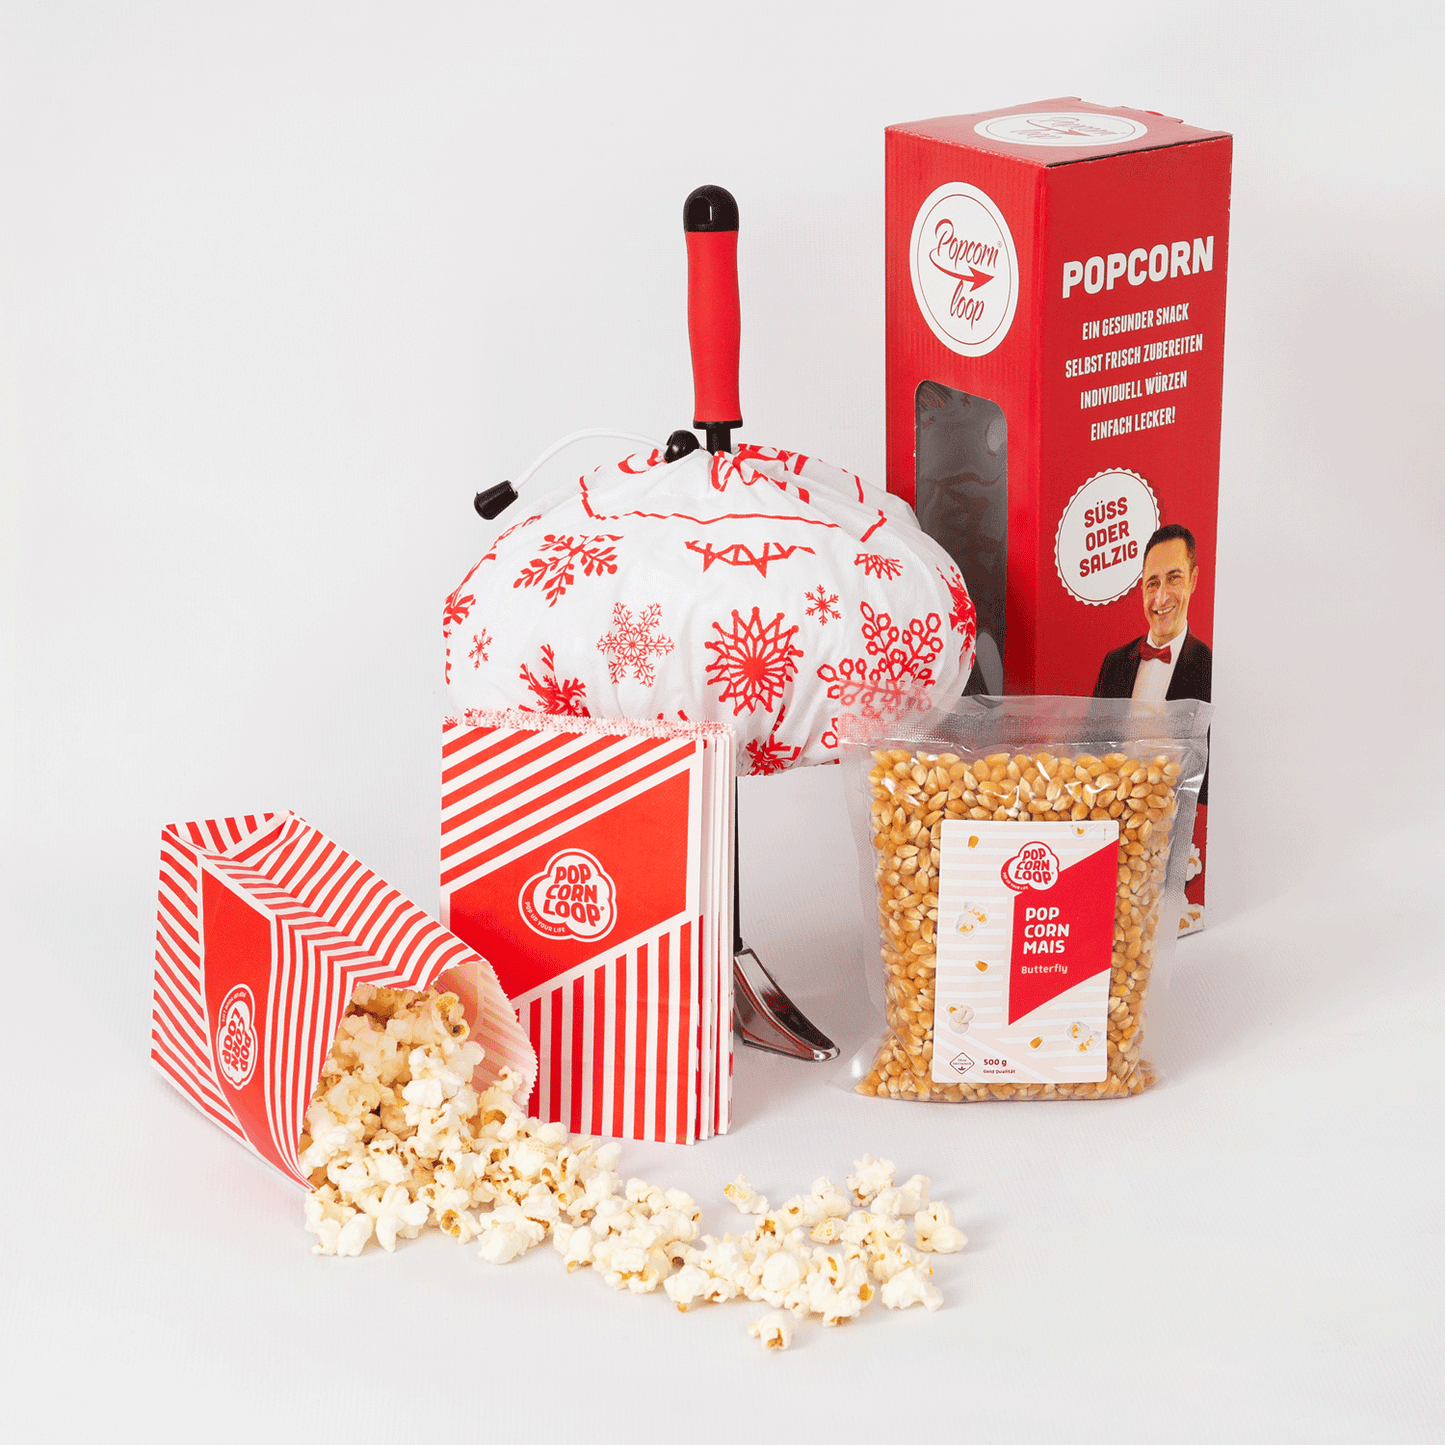 Starter set: Popcornloop I Butterfly 500g I 5 pieces of popcorn bags